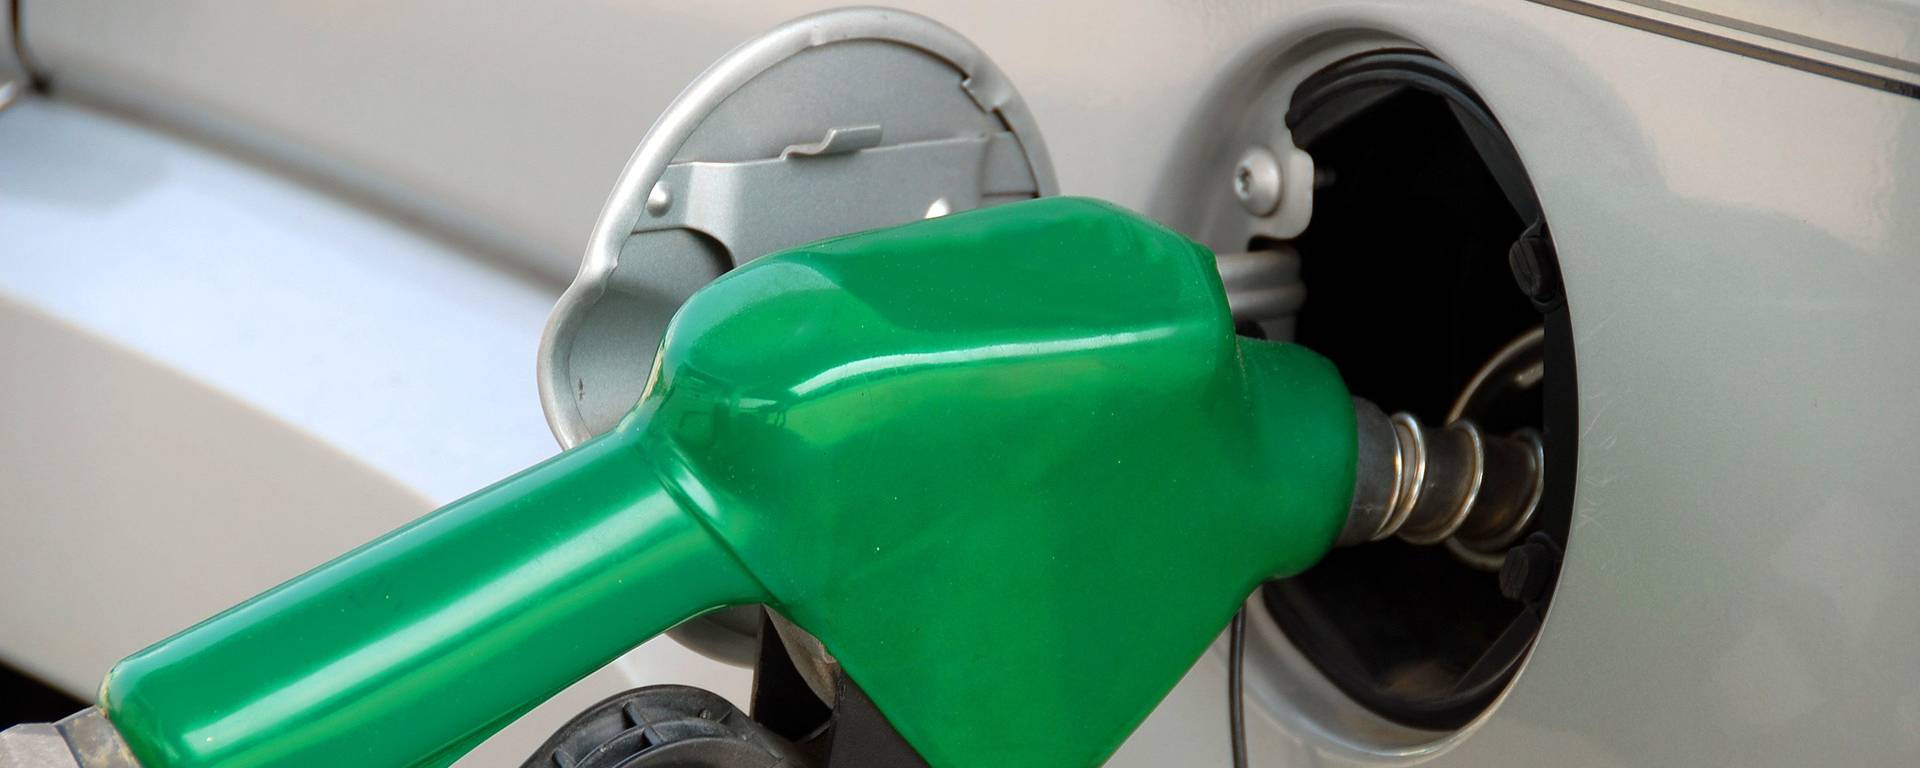 Station essence et prix des carburants